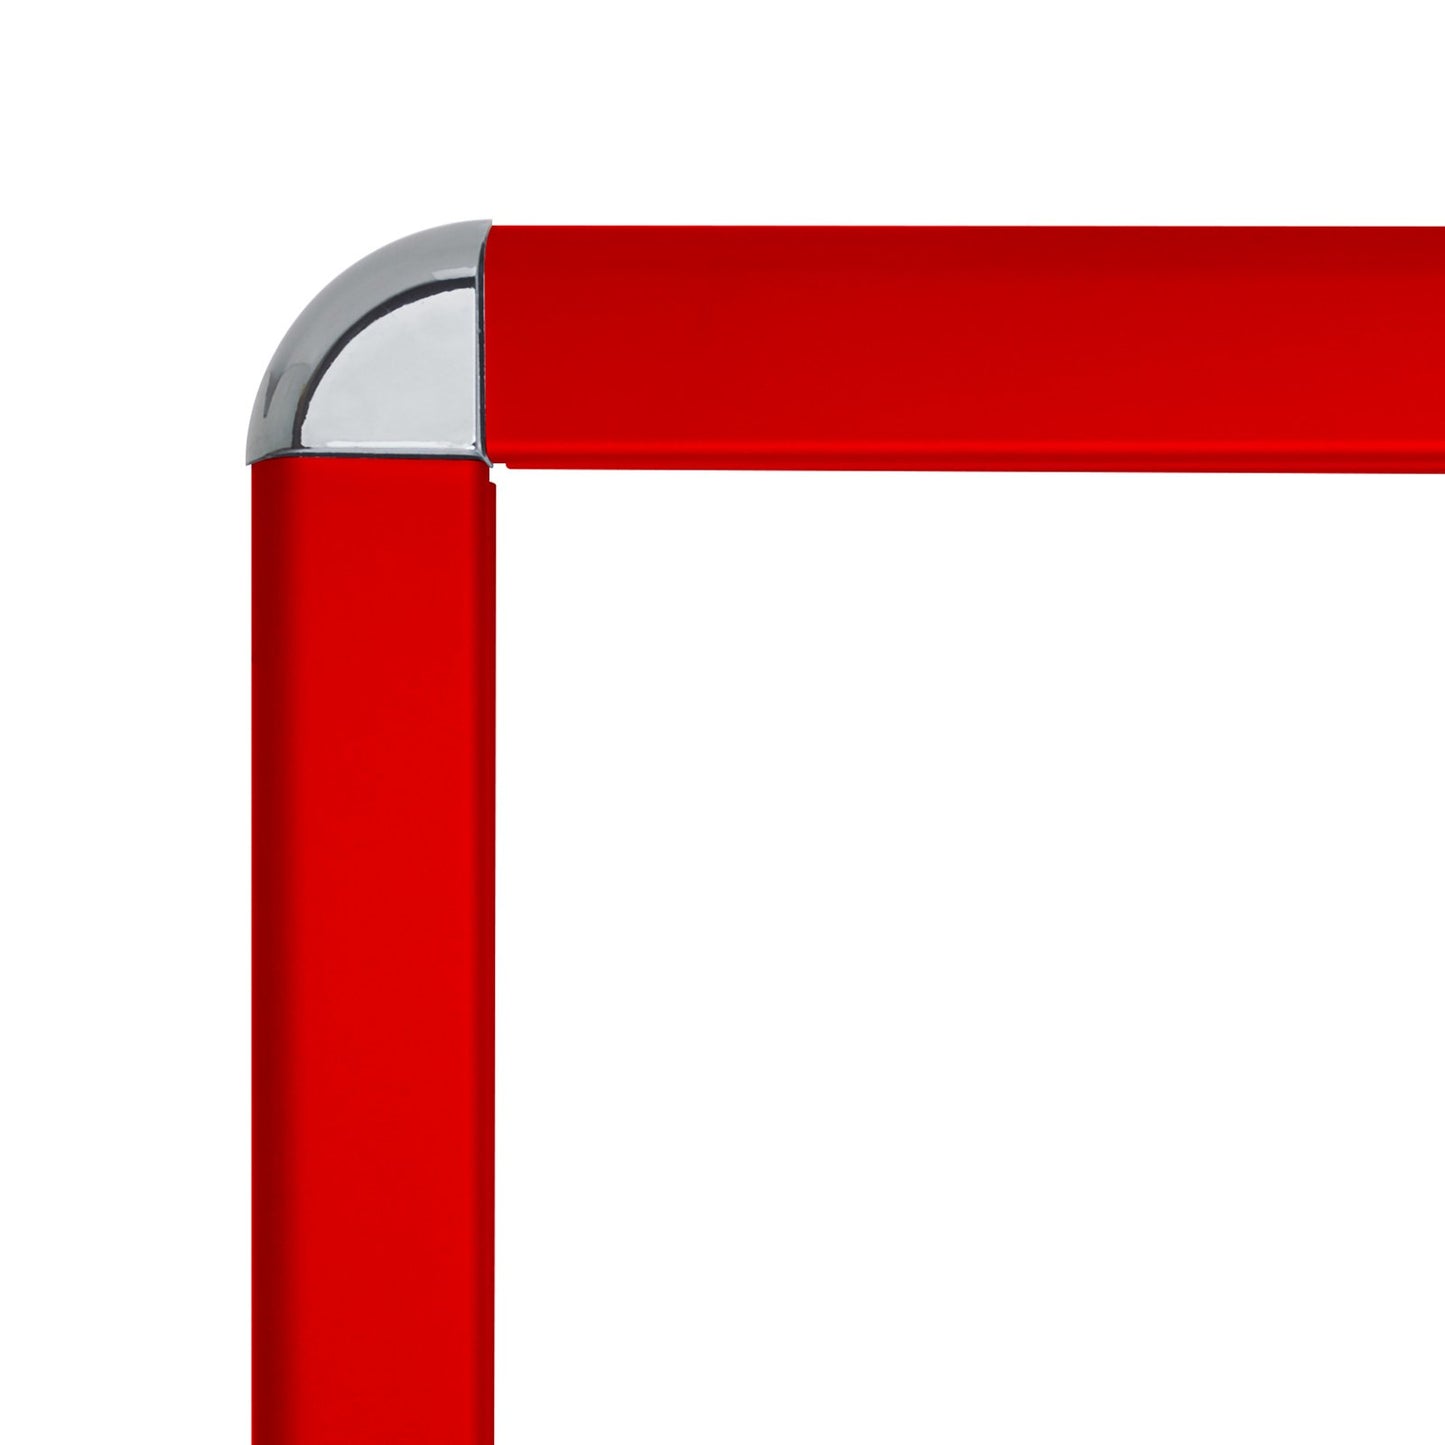 Marco a presión de esquinas redondeadas rojo de 21,59 x 27,94 cm - Perfil de 32 mm